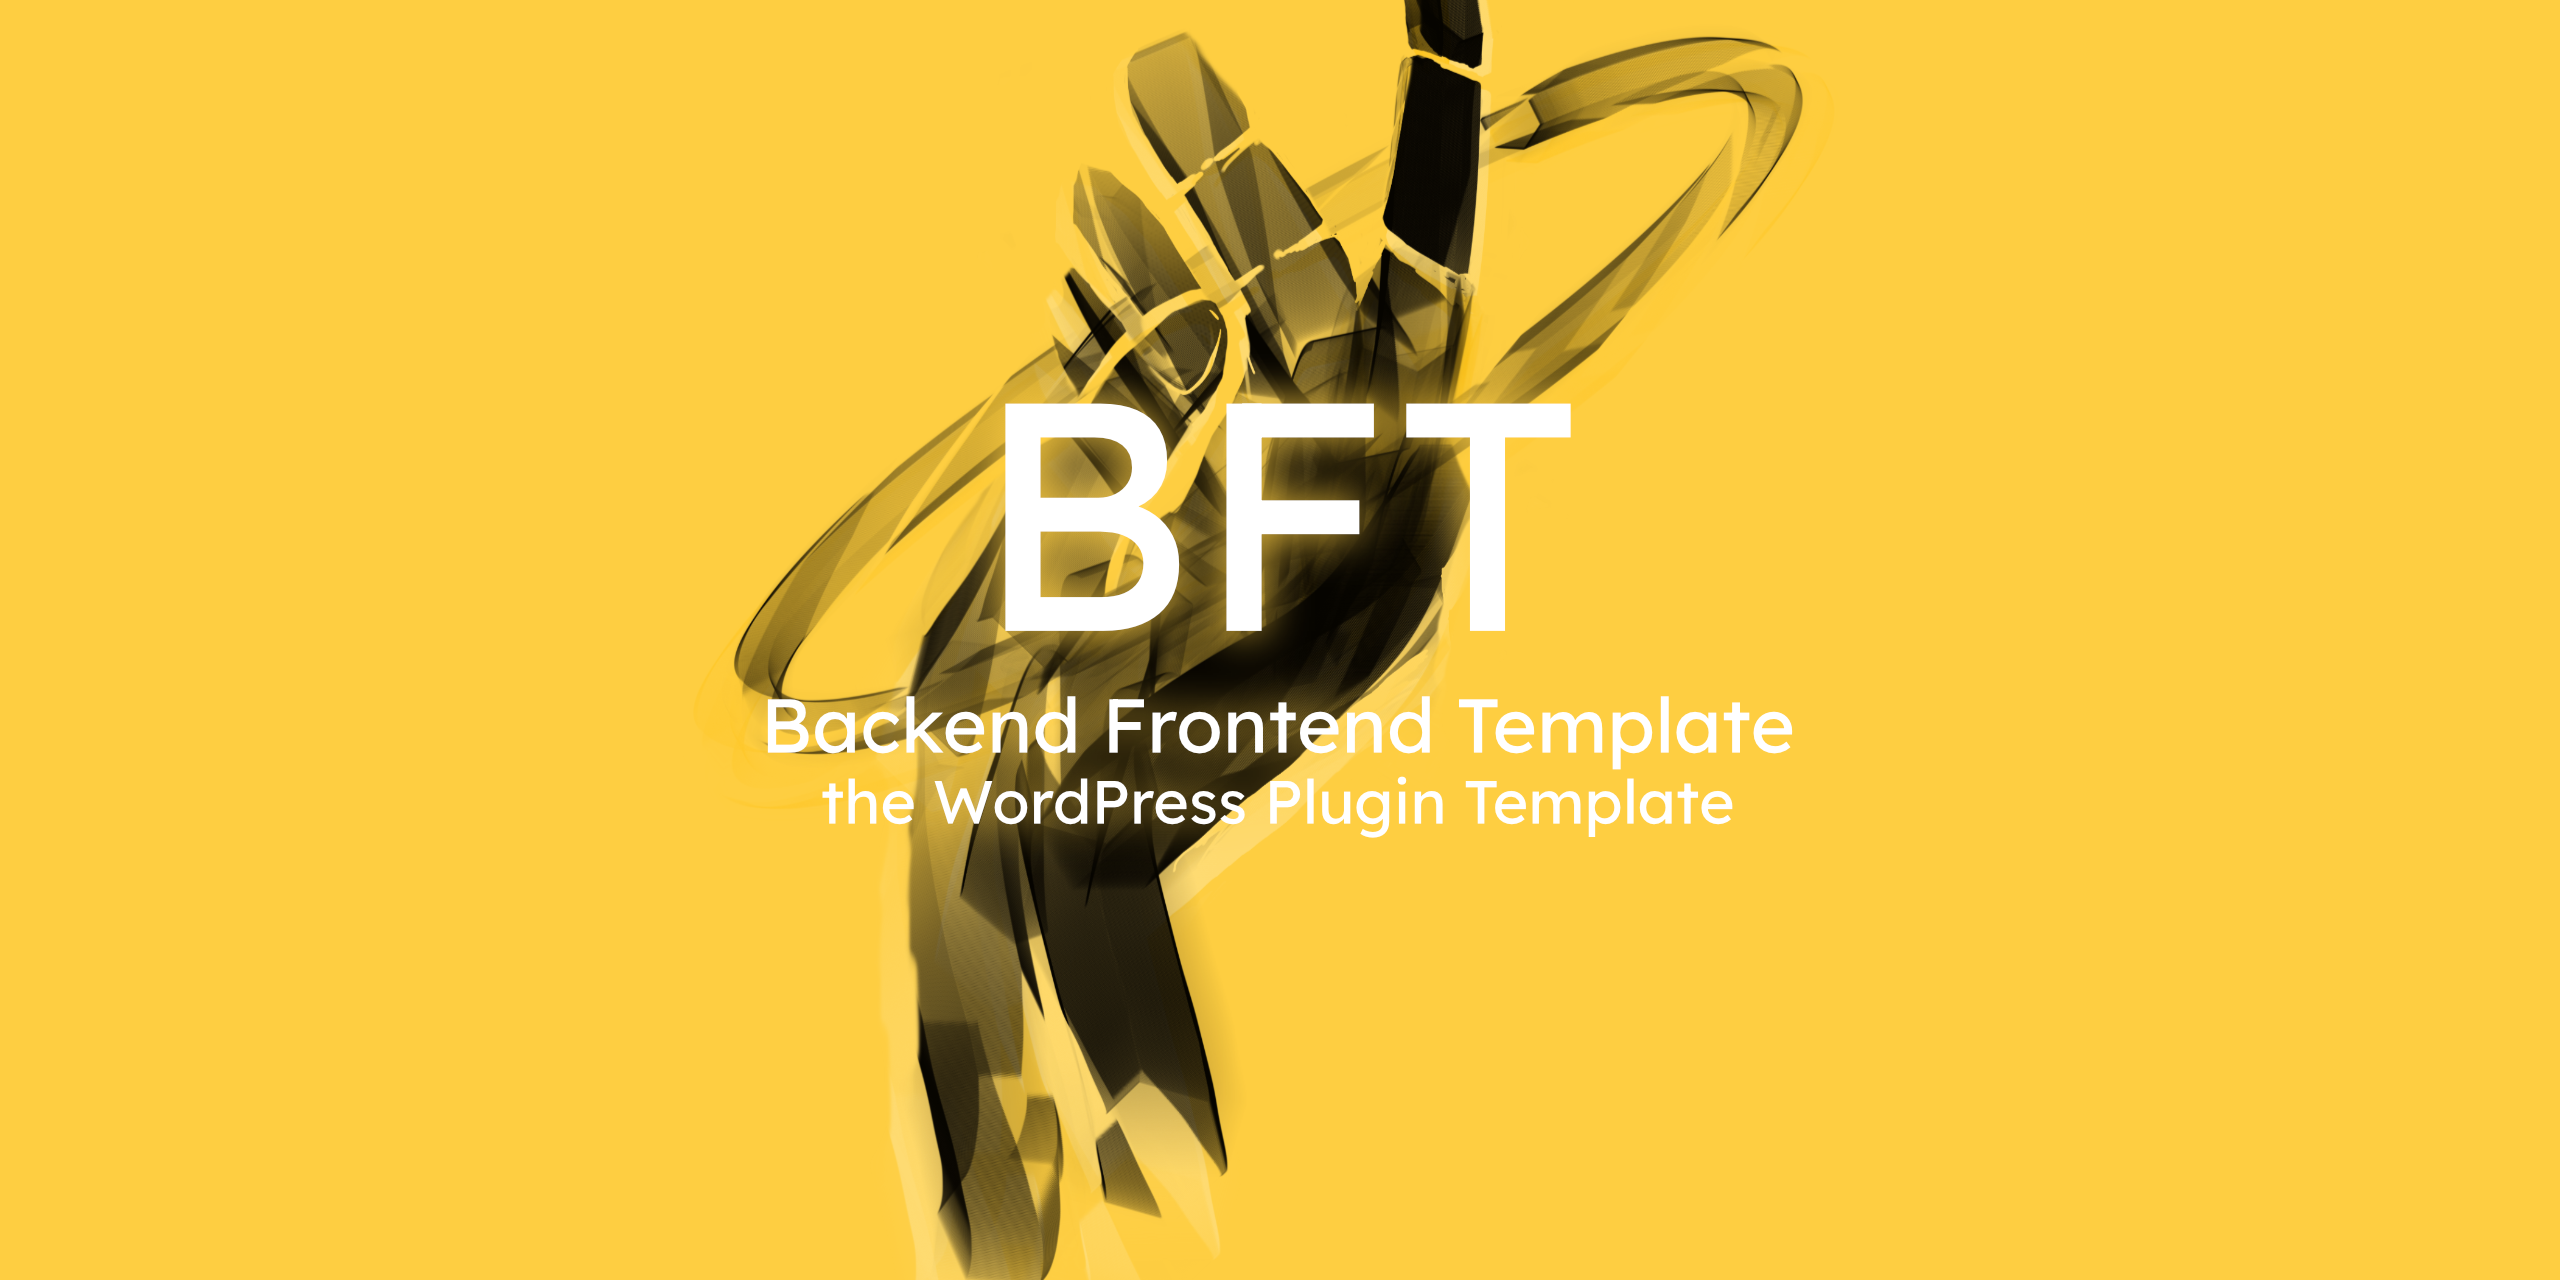 Backend Frontend Template is a WordPress Plugin Template